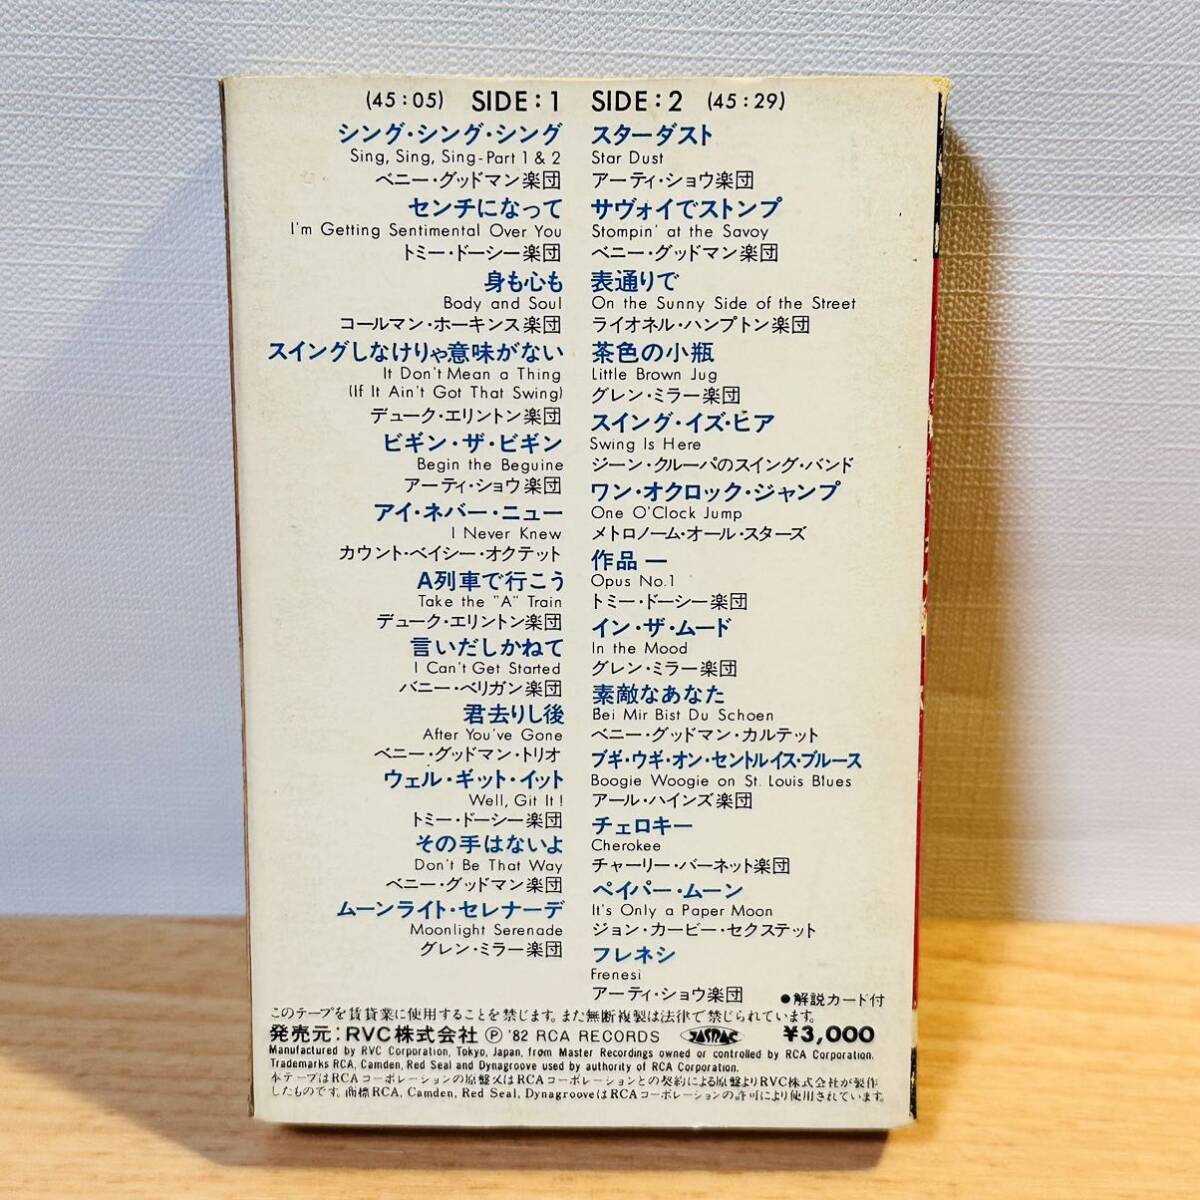  cassette tape The * swing [be knee gdo man, count Bay si-, Glenn mirror, Gene Crew pa, other ]